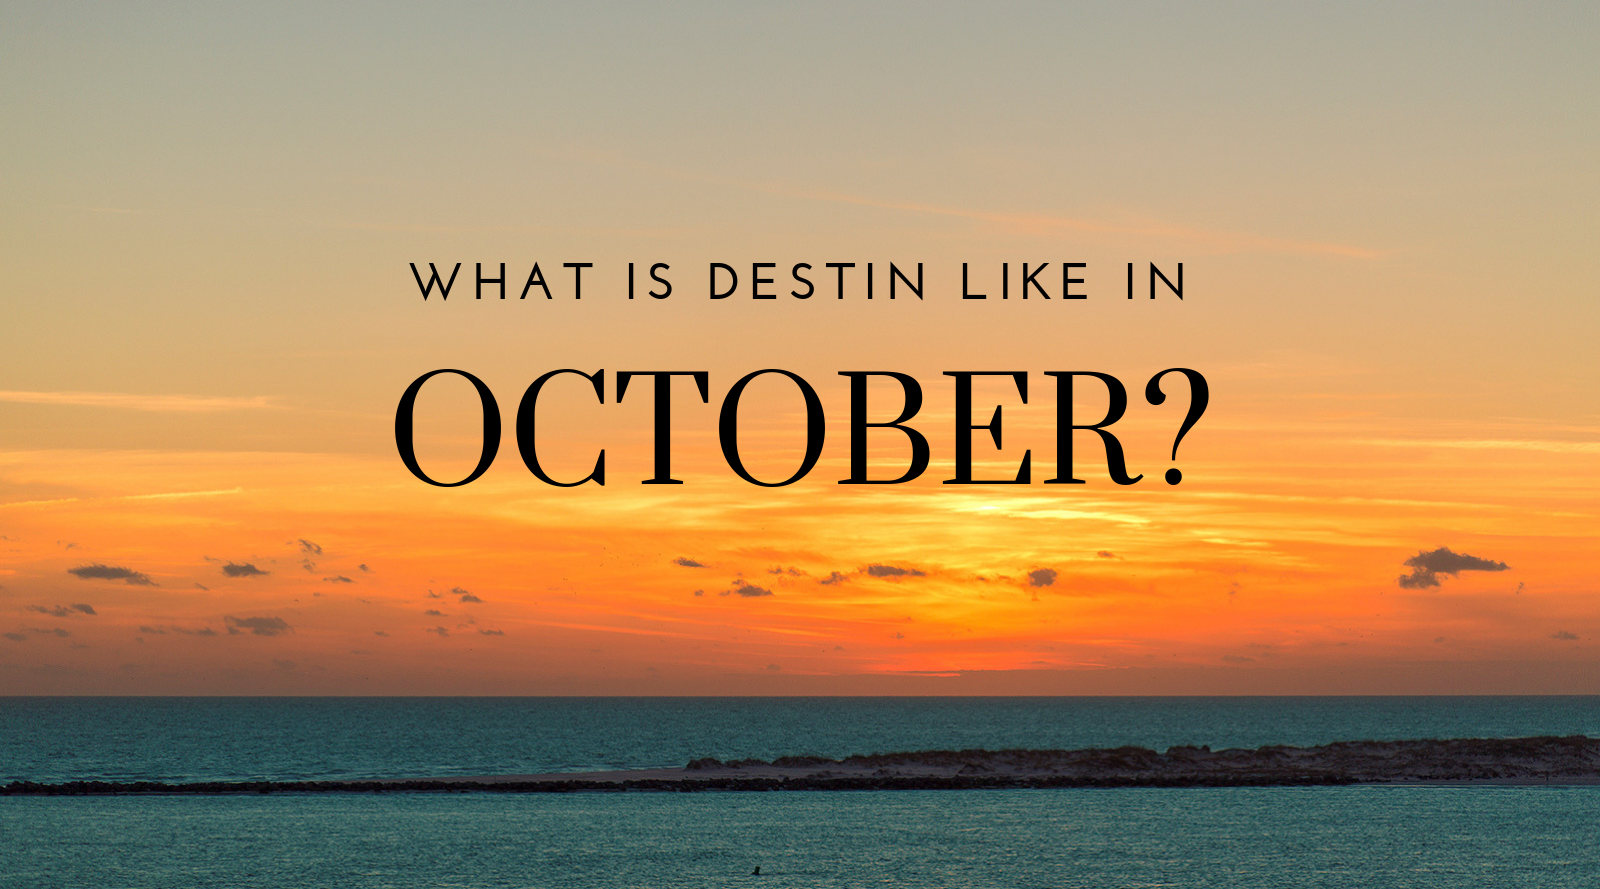 October in Destin